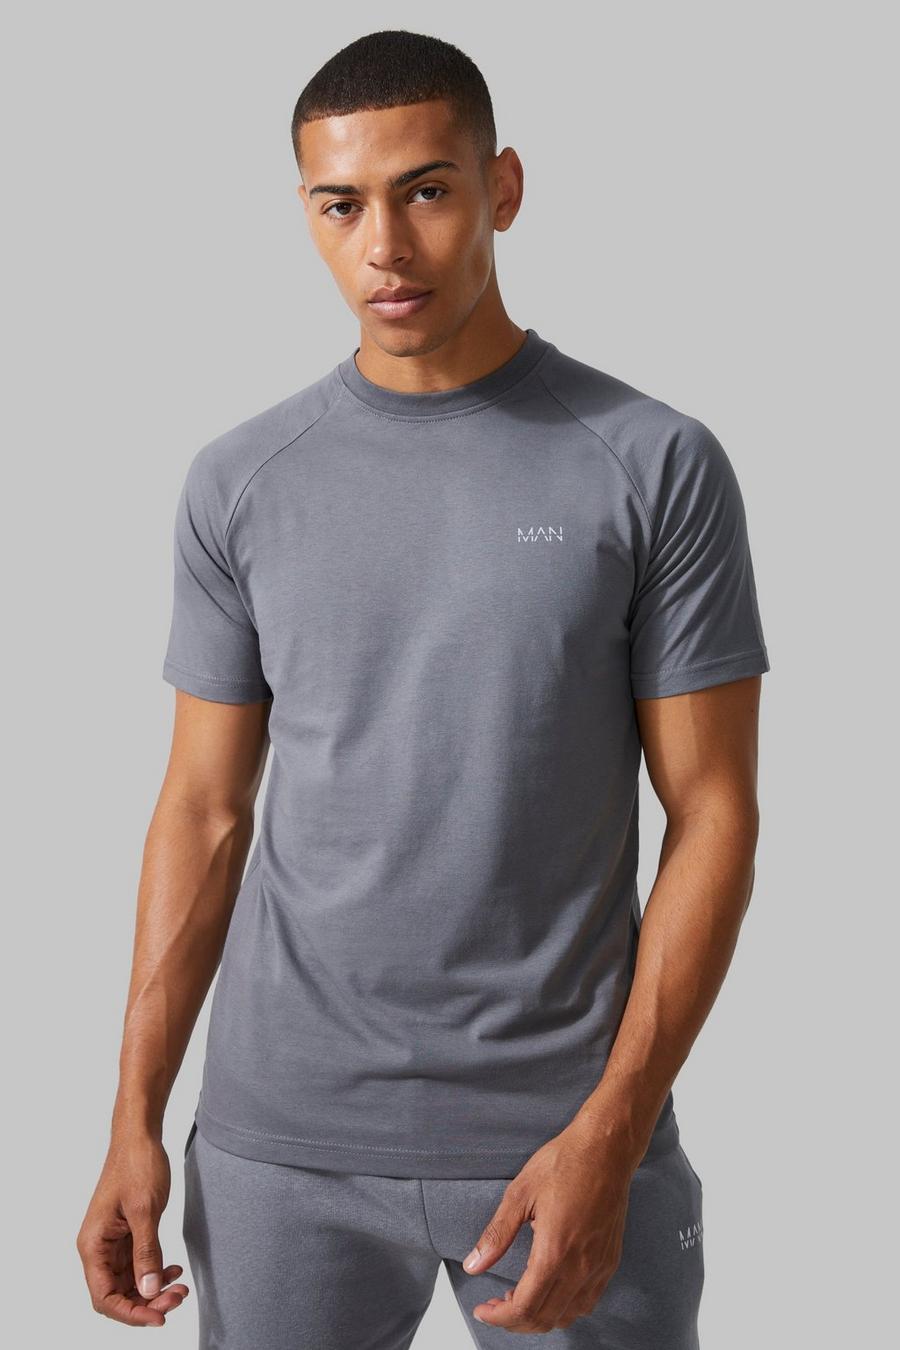 Man Active Gym Raglan T-Shirt, Charcoal image number 1